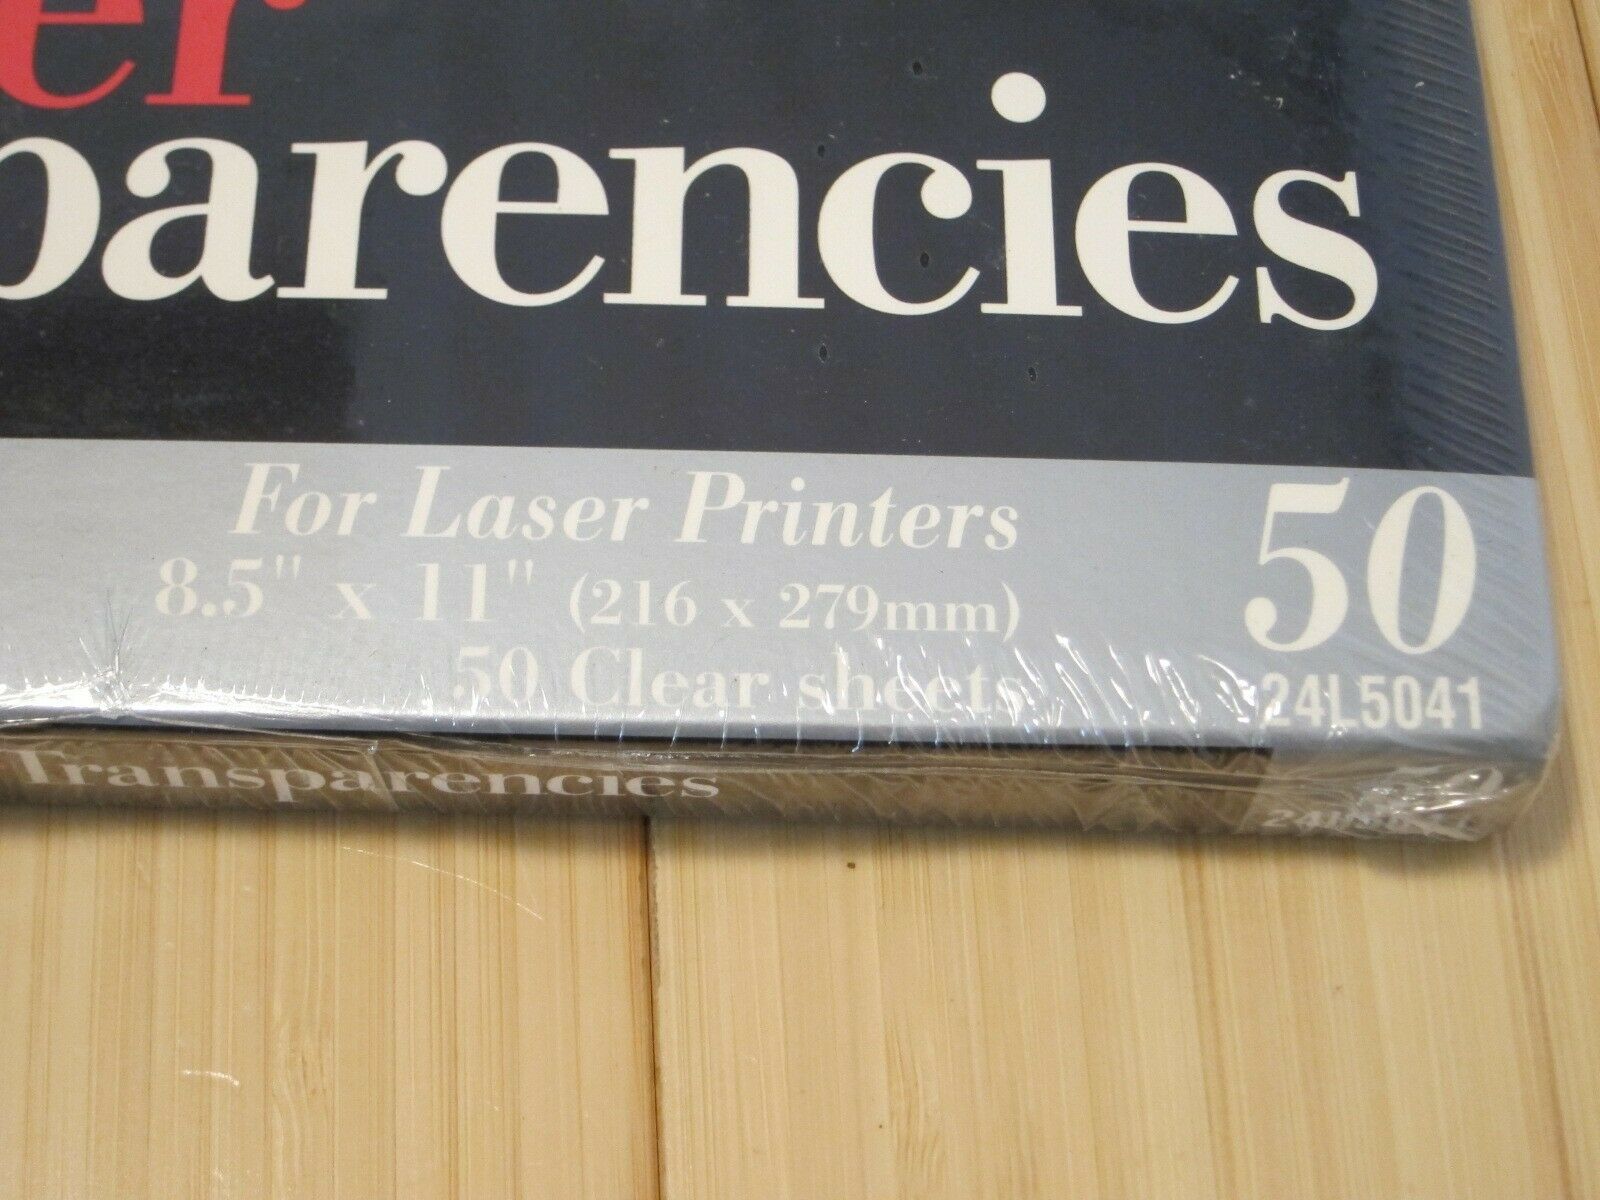 Apollo Laser Printer Transparency Film - 50 / Box - Clear